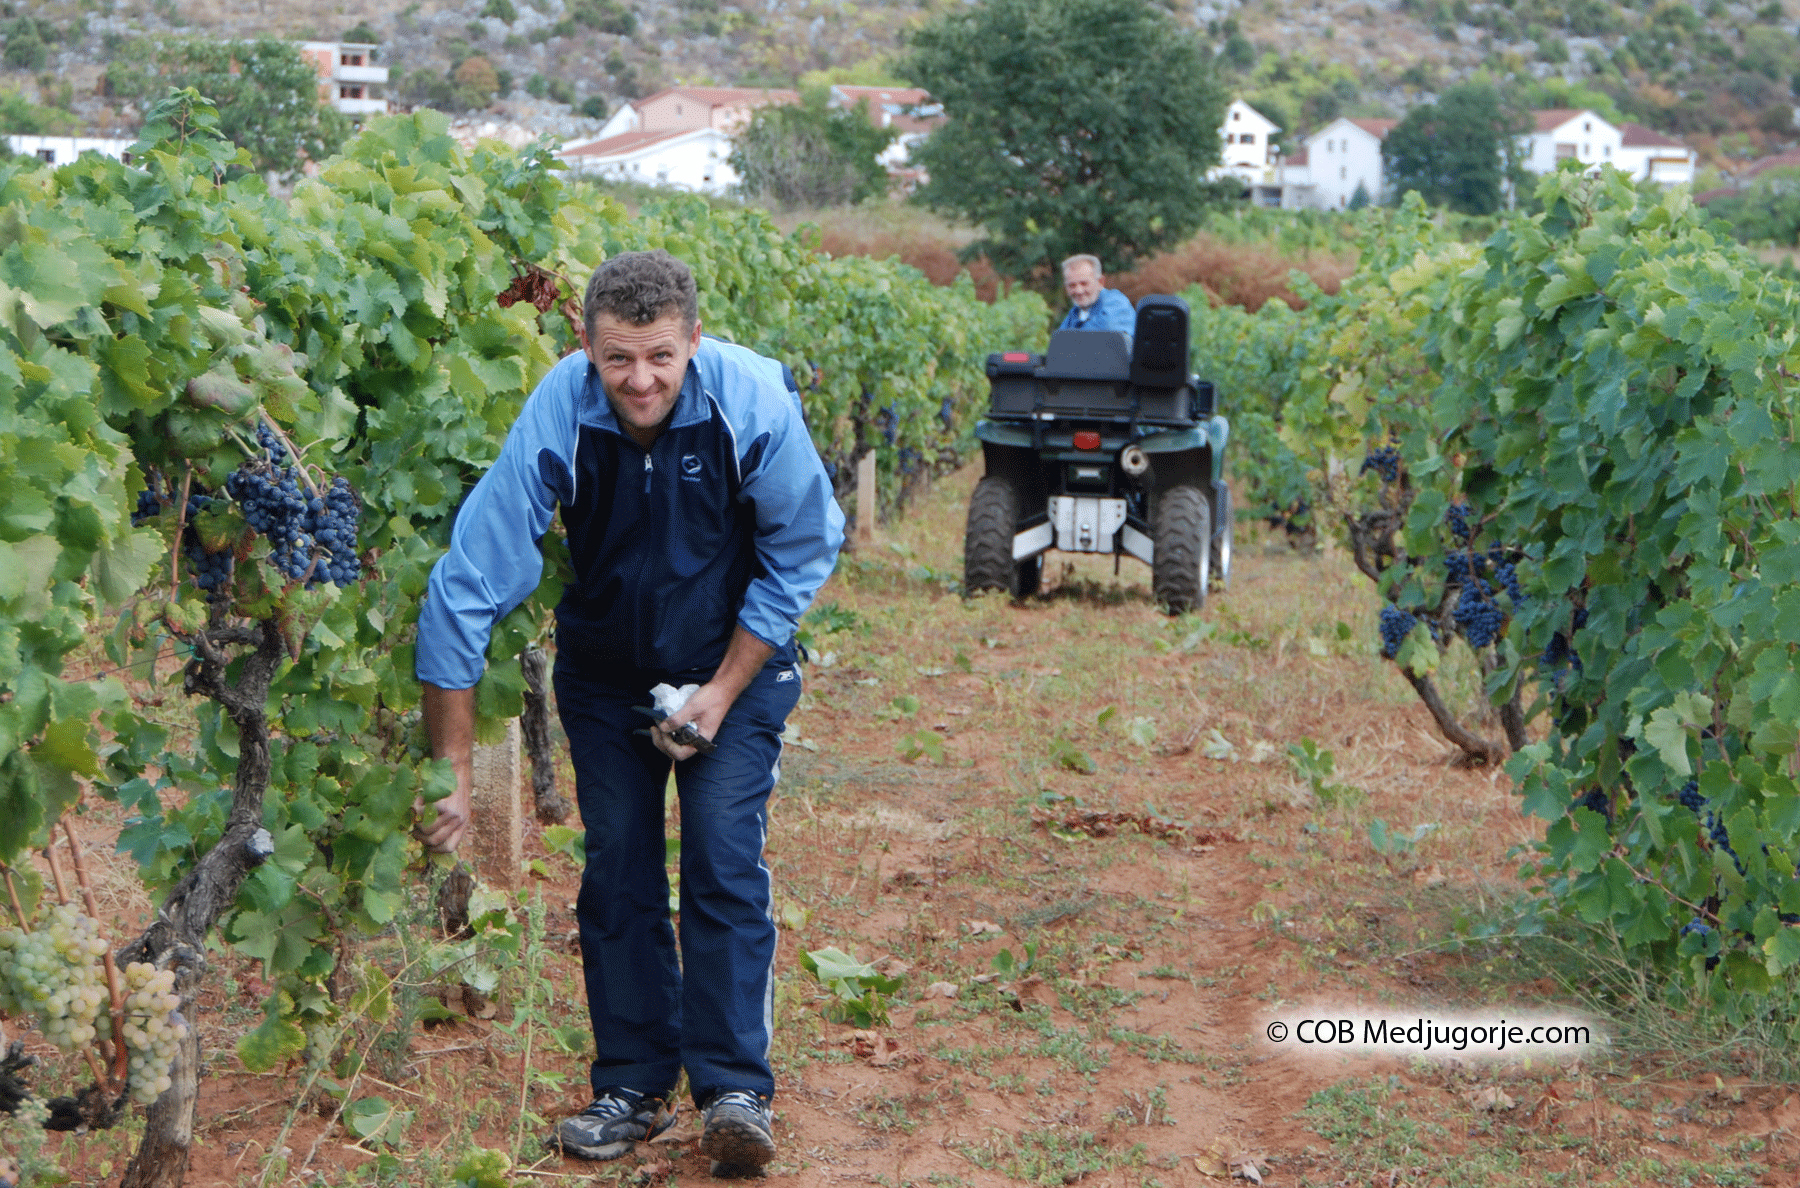 Villagers picking Grapes in Medjugorje